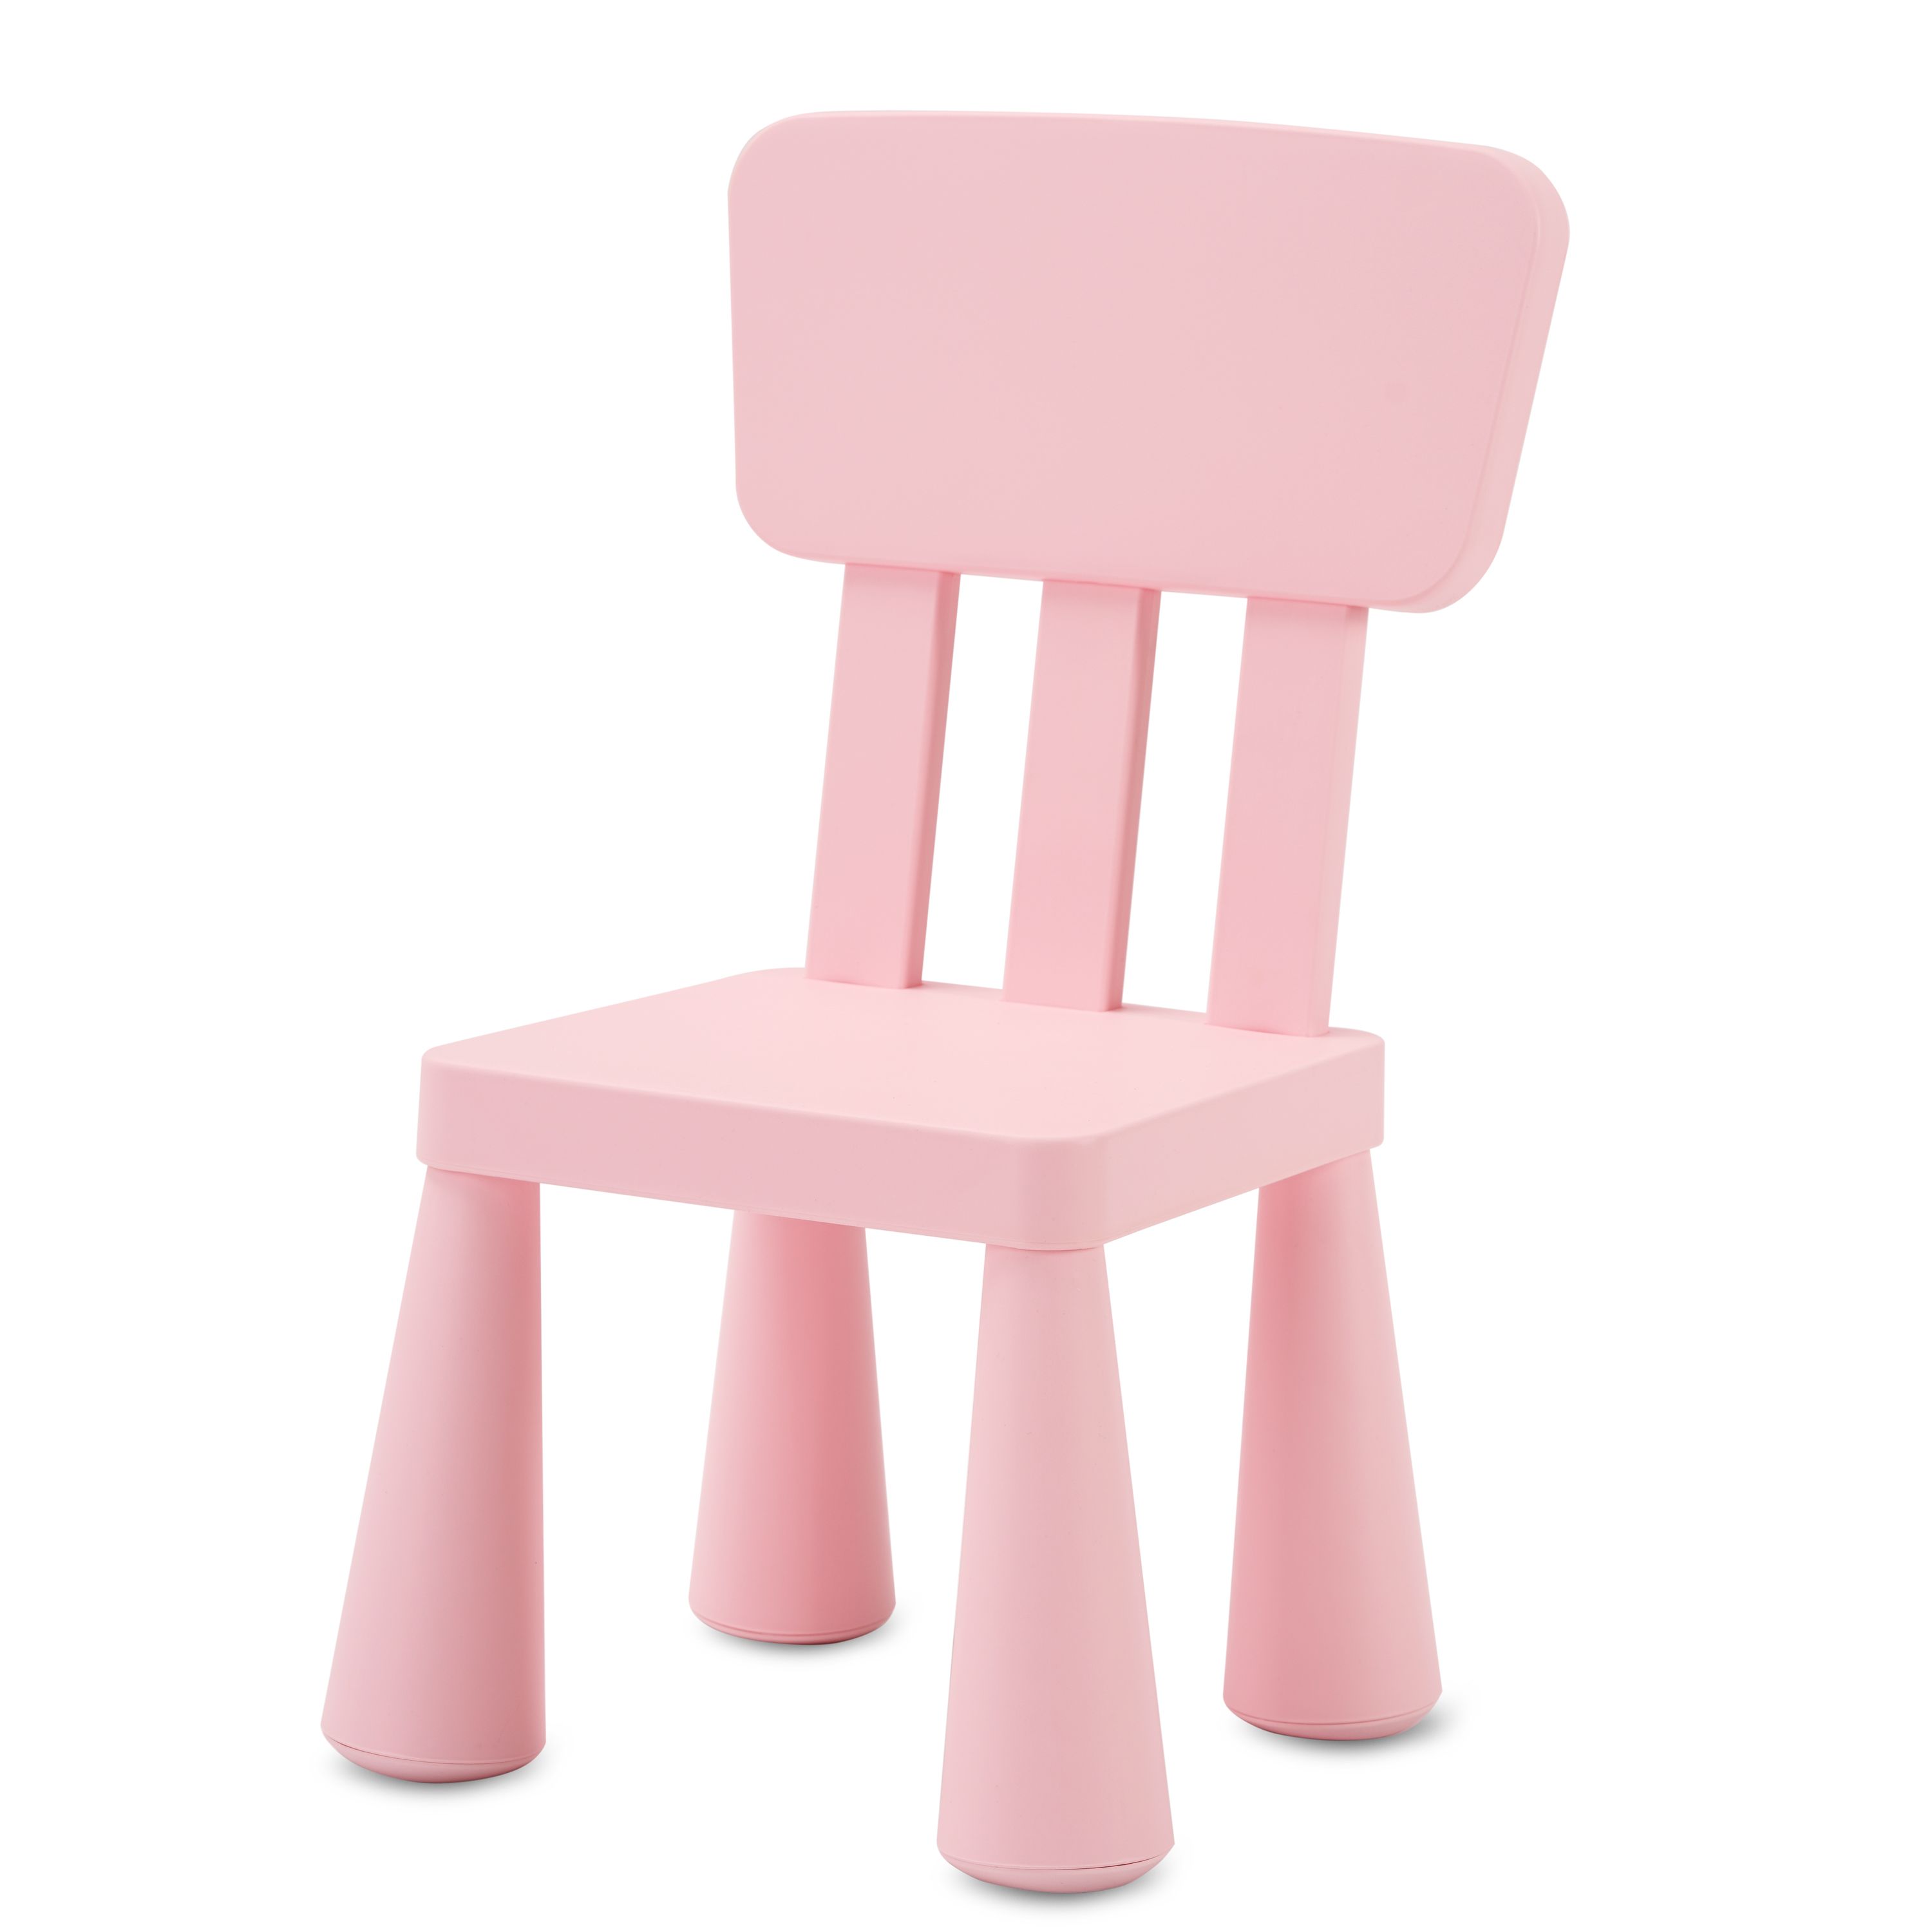 Детский стул интернет магазин. Детский стул икеа маммут. Детский стол ikea маммут. Стол детский икеа маммут розовый. Розовый стул маммут икеа.